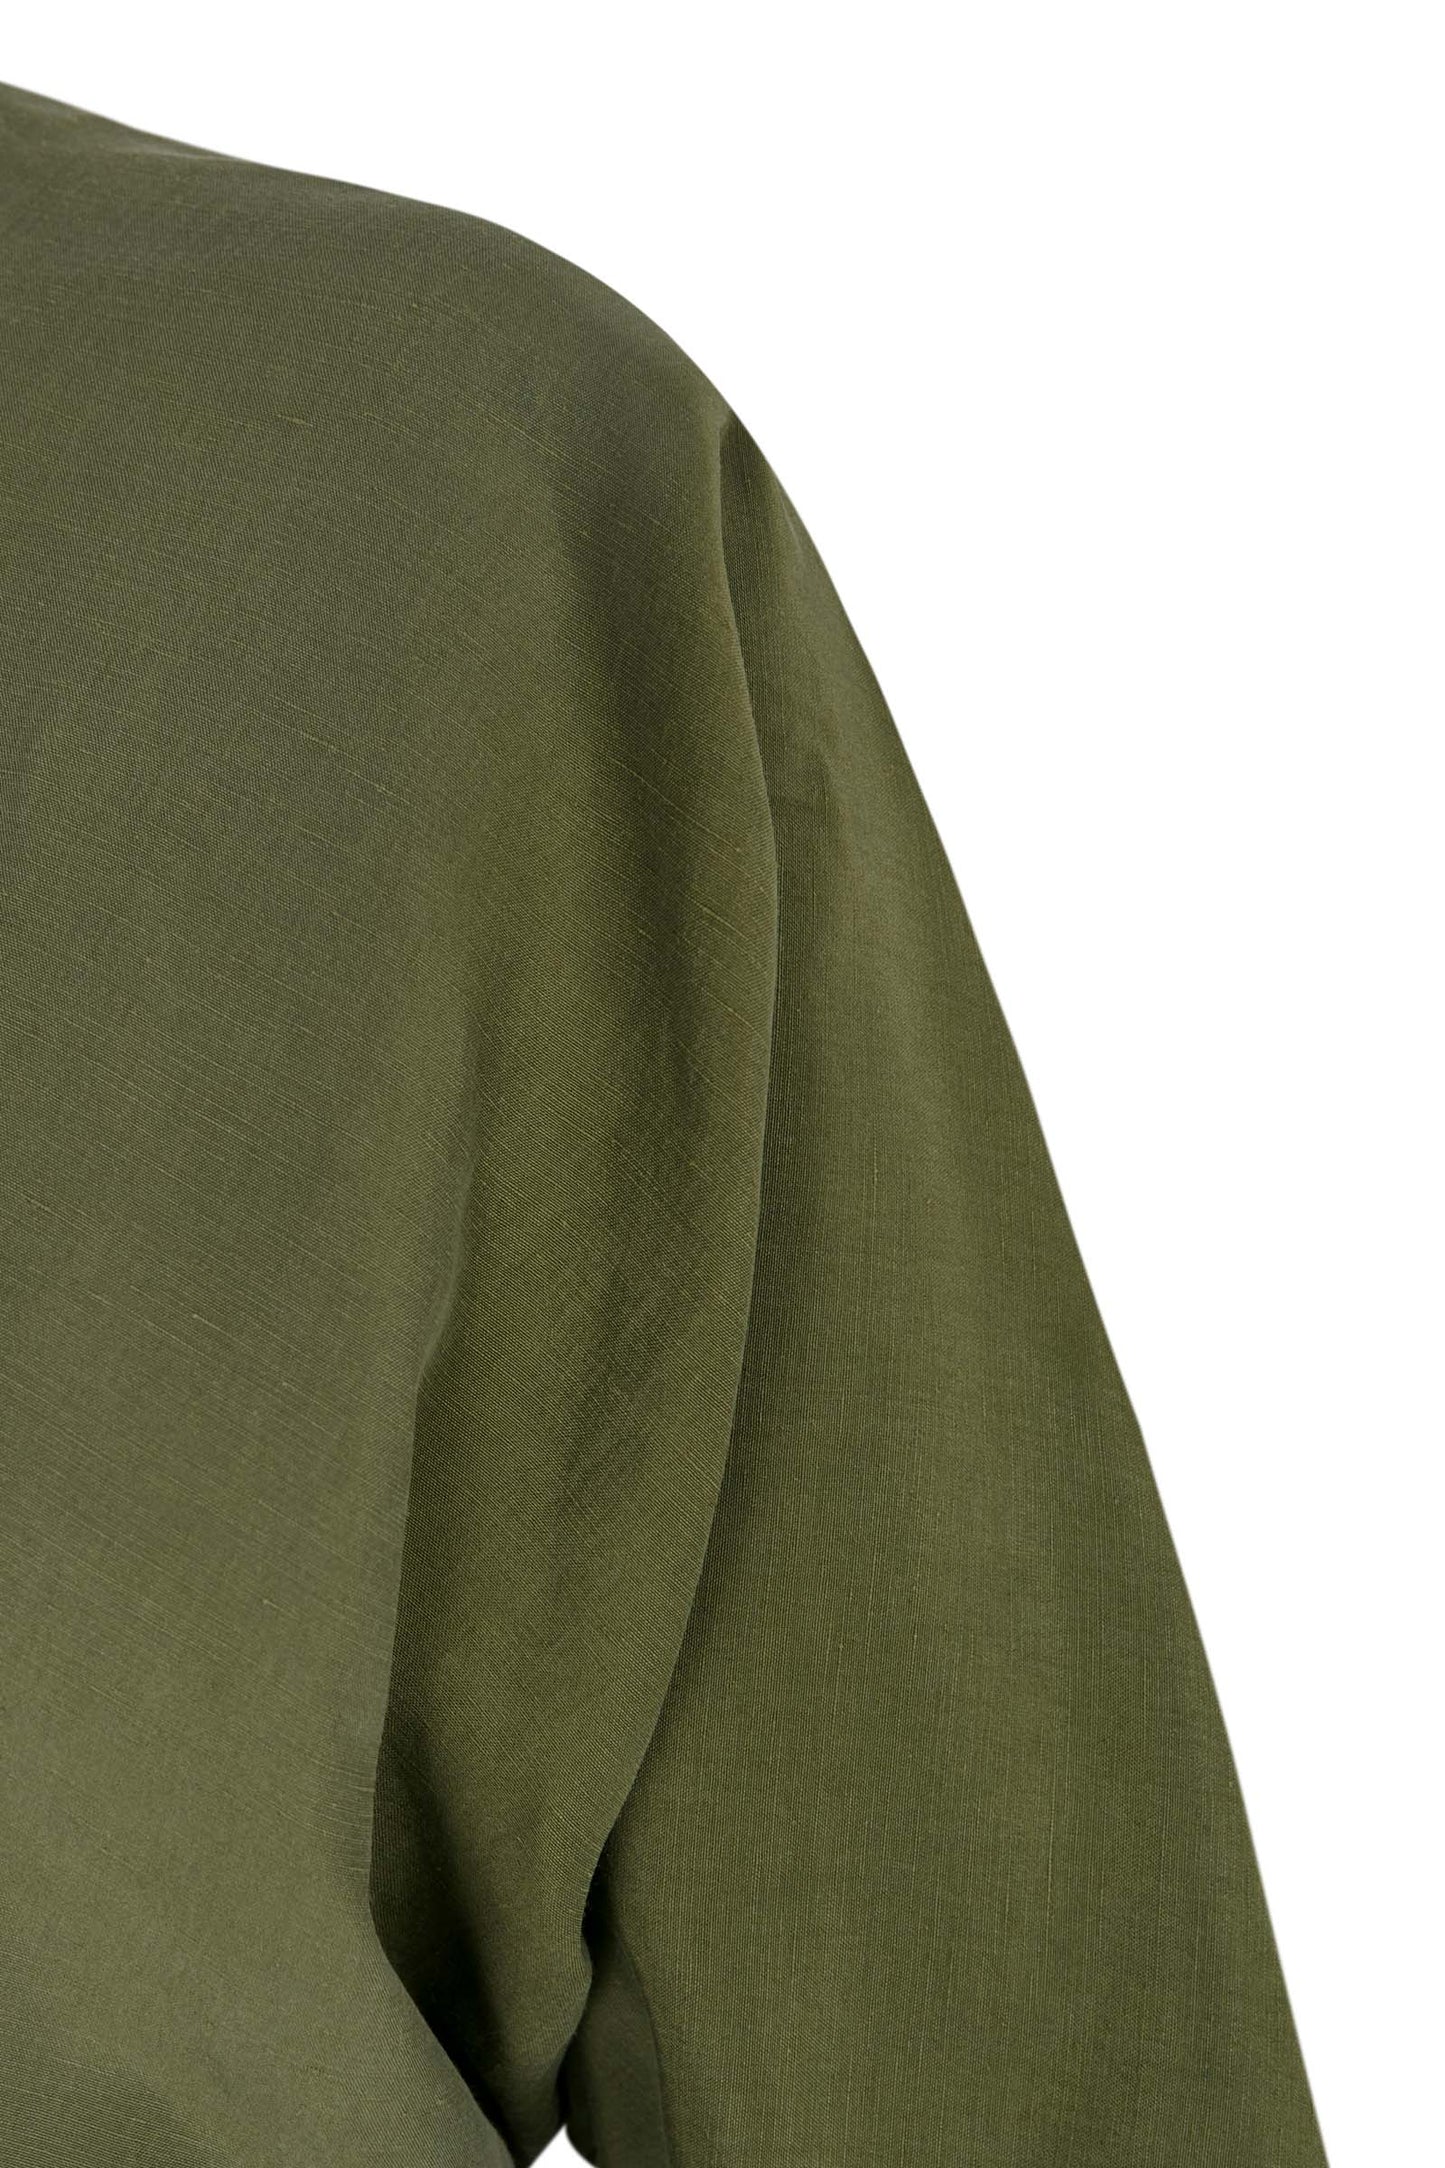 Tanami, long dress in jungle green linen and silk